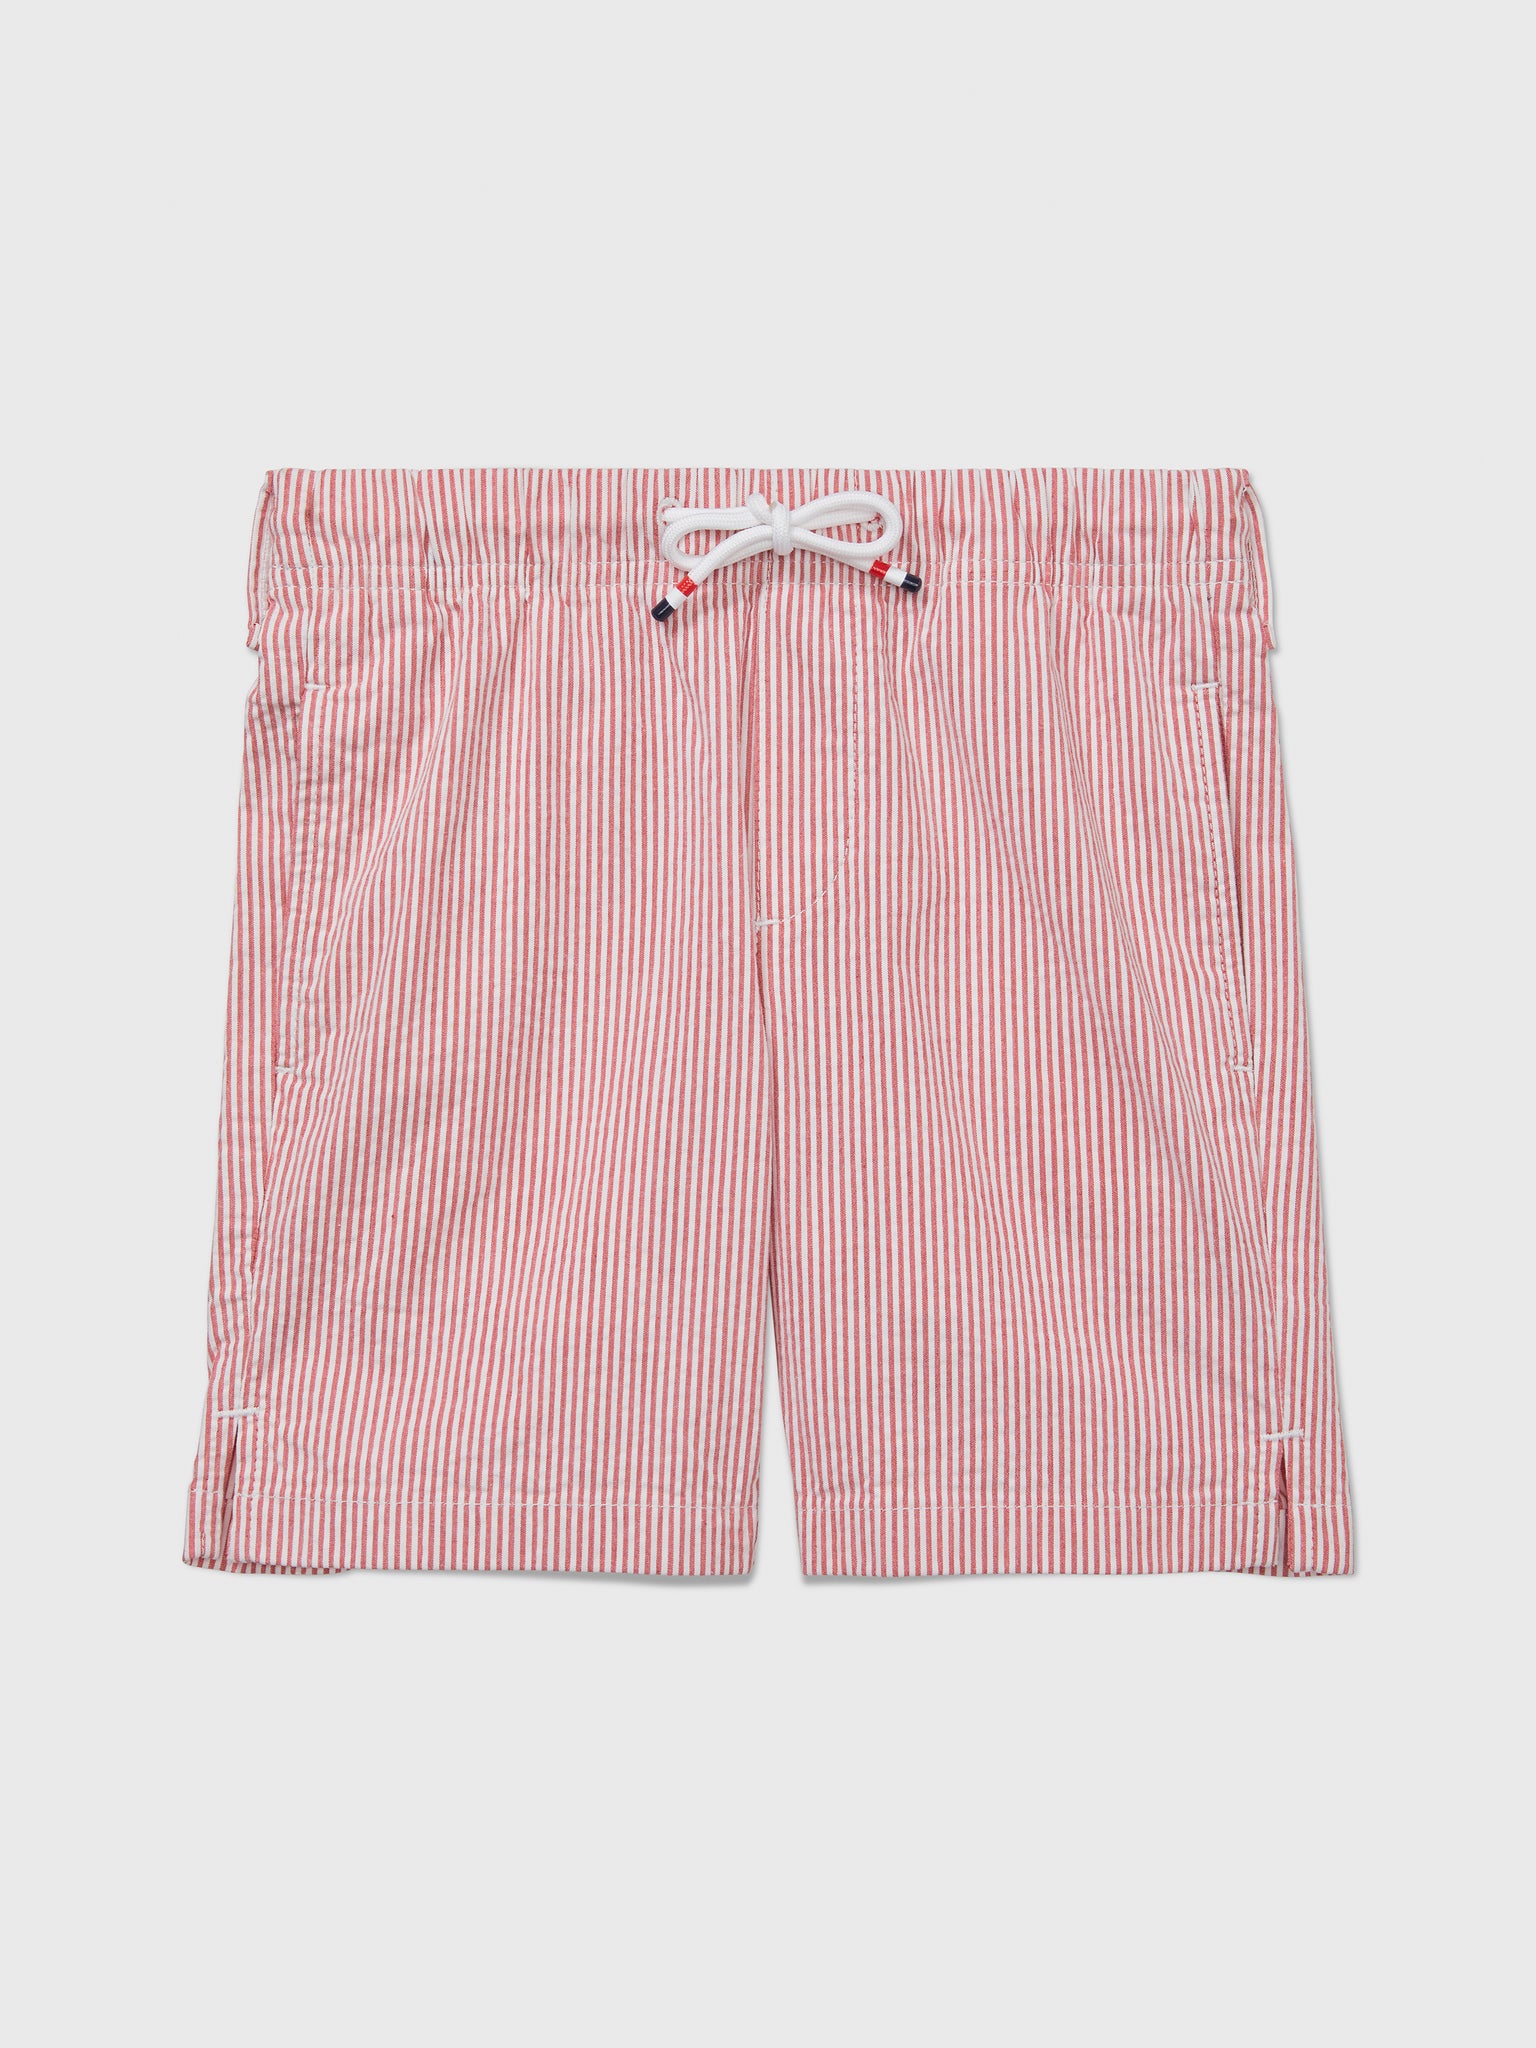 Pull On Shorts (Kids) - Blush Red